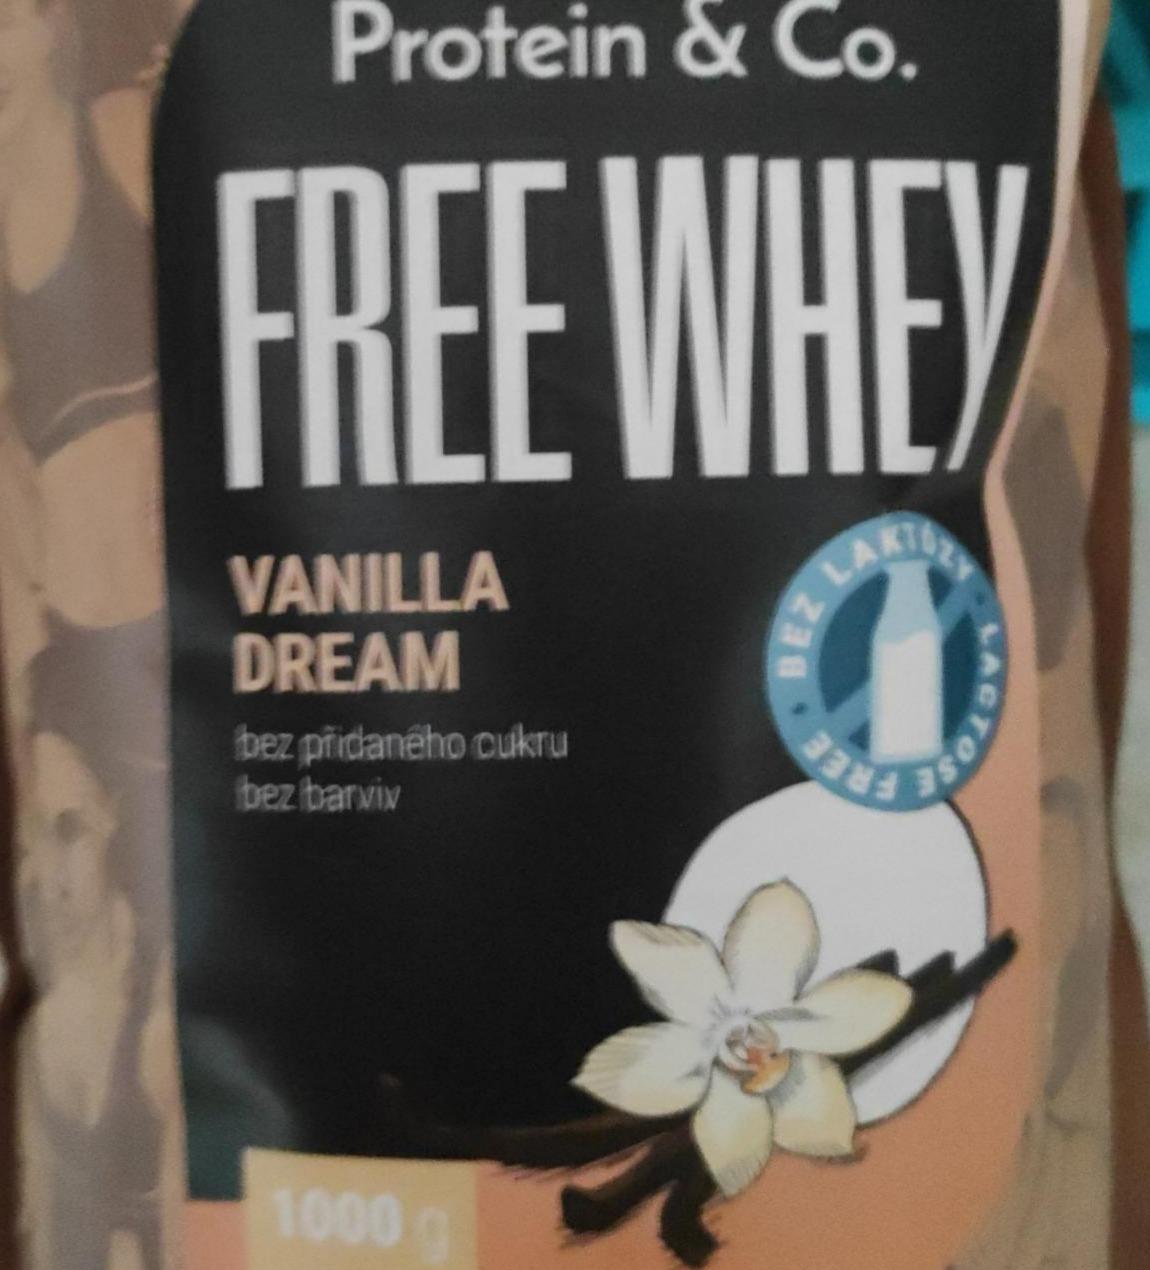 Fotografie - Free whey protein vanilla dream Protein & Co.